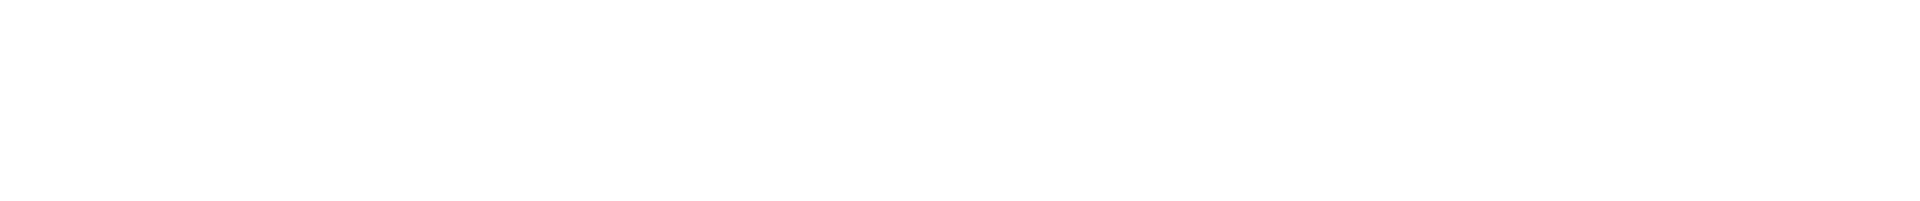 Carlsberg Logo